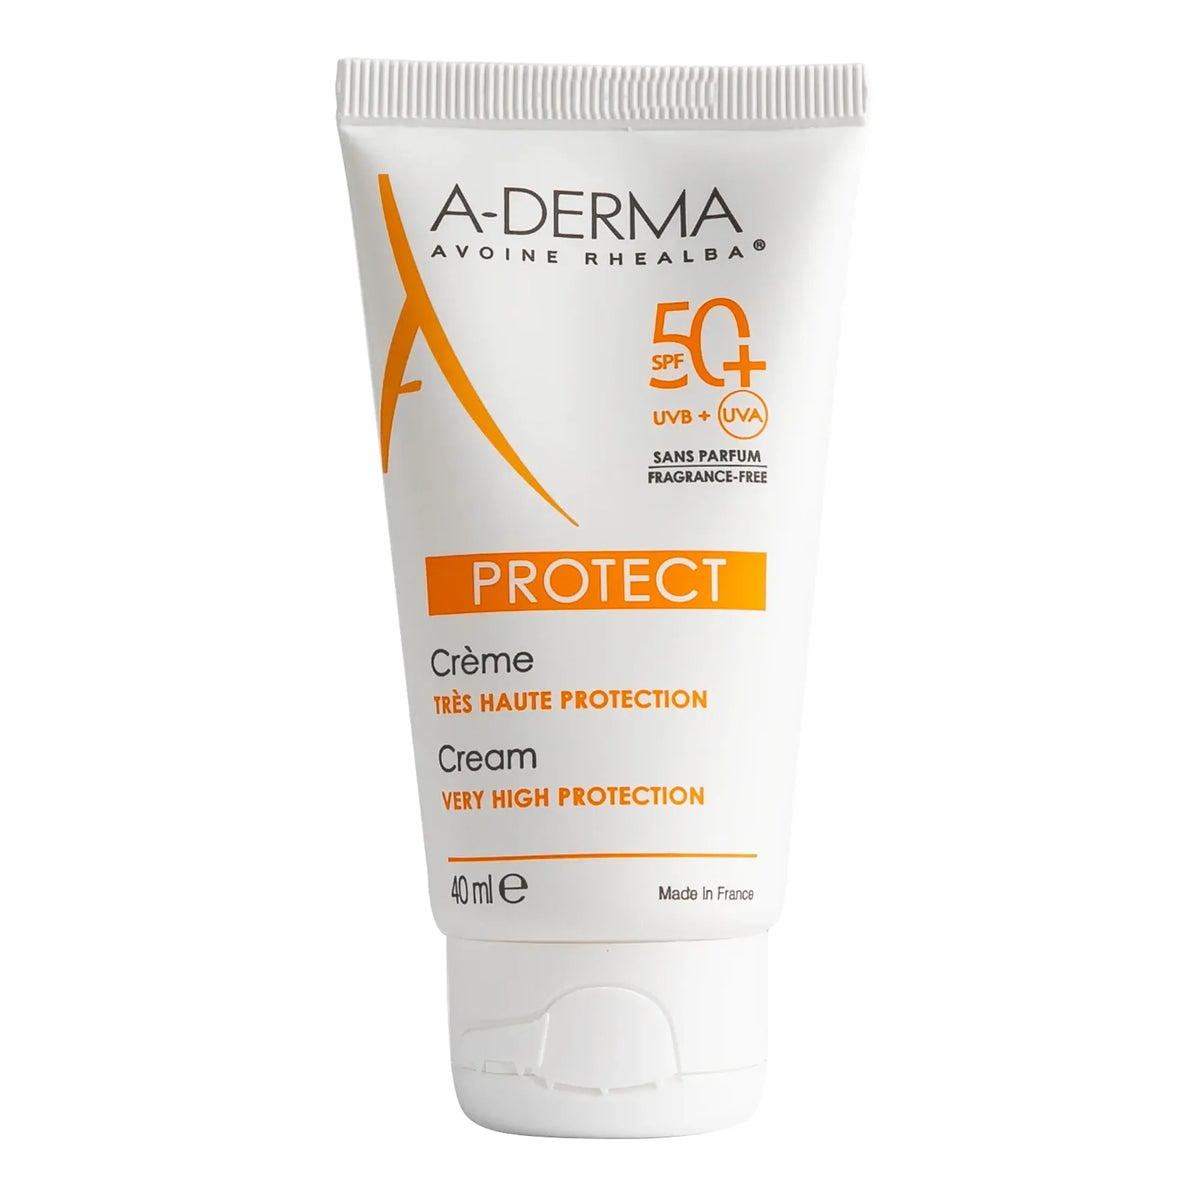 Protect Cream SPF 50+ Fragrance-Free